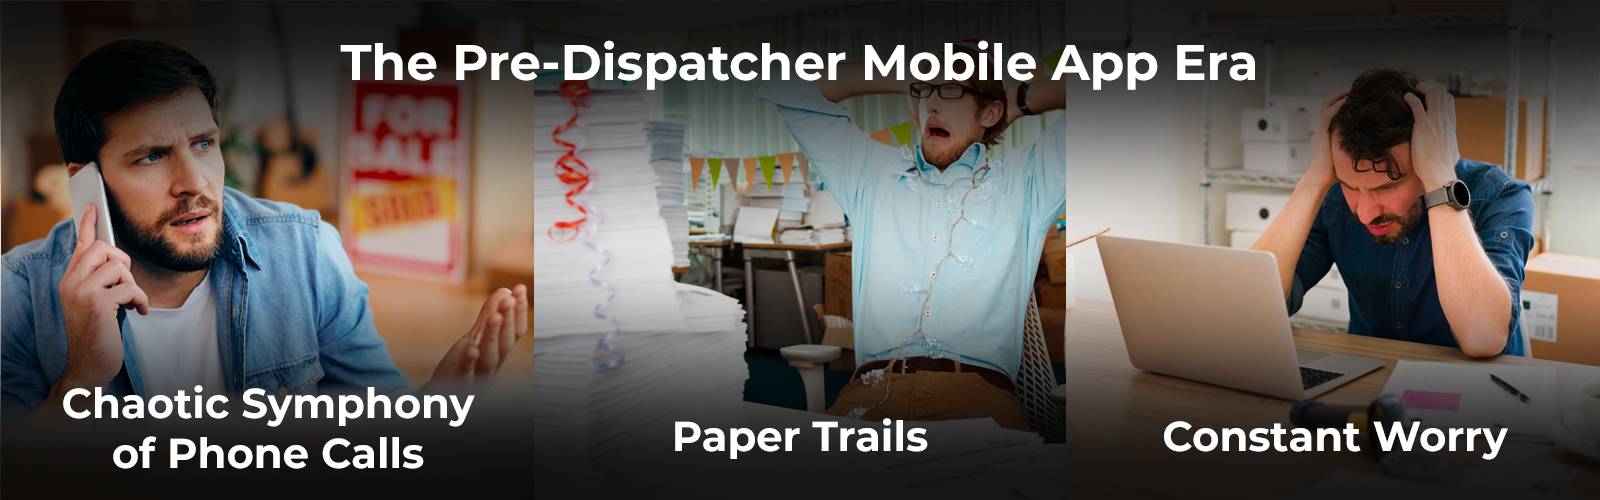 Egy diszpécser élete Dispatcher Mobile App nélkül